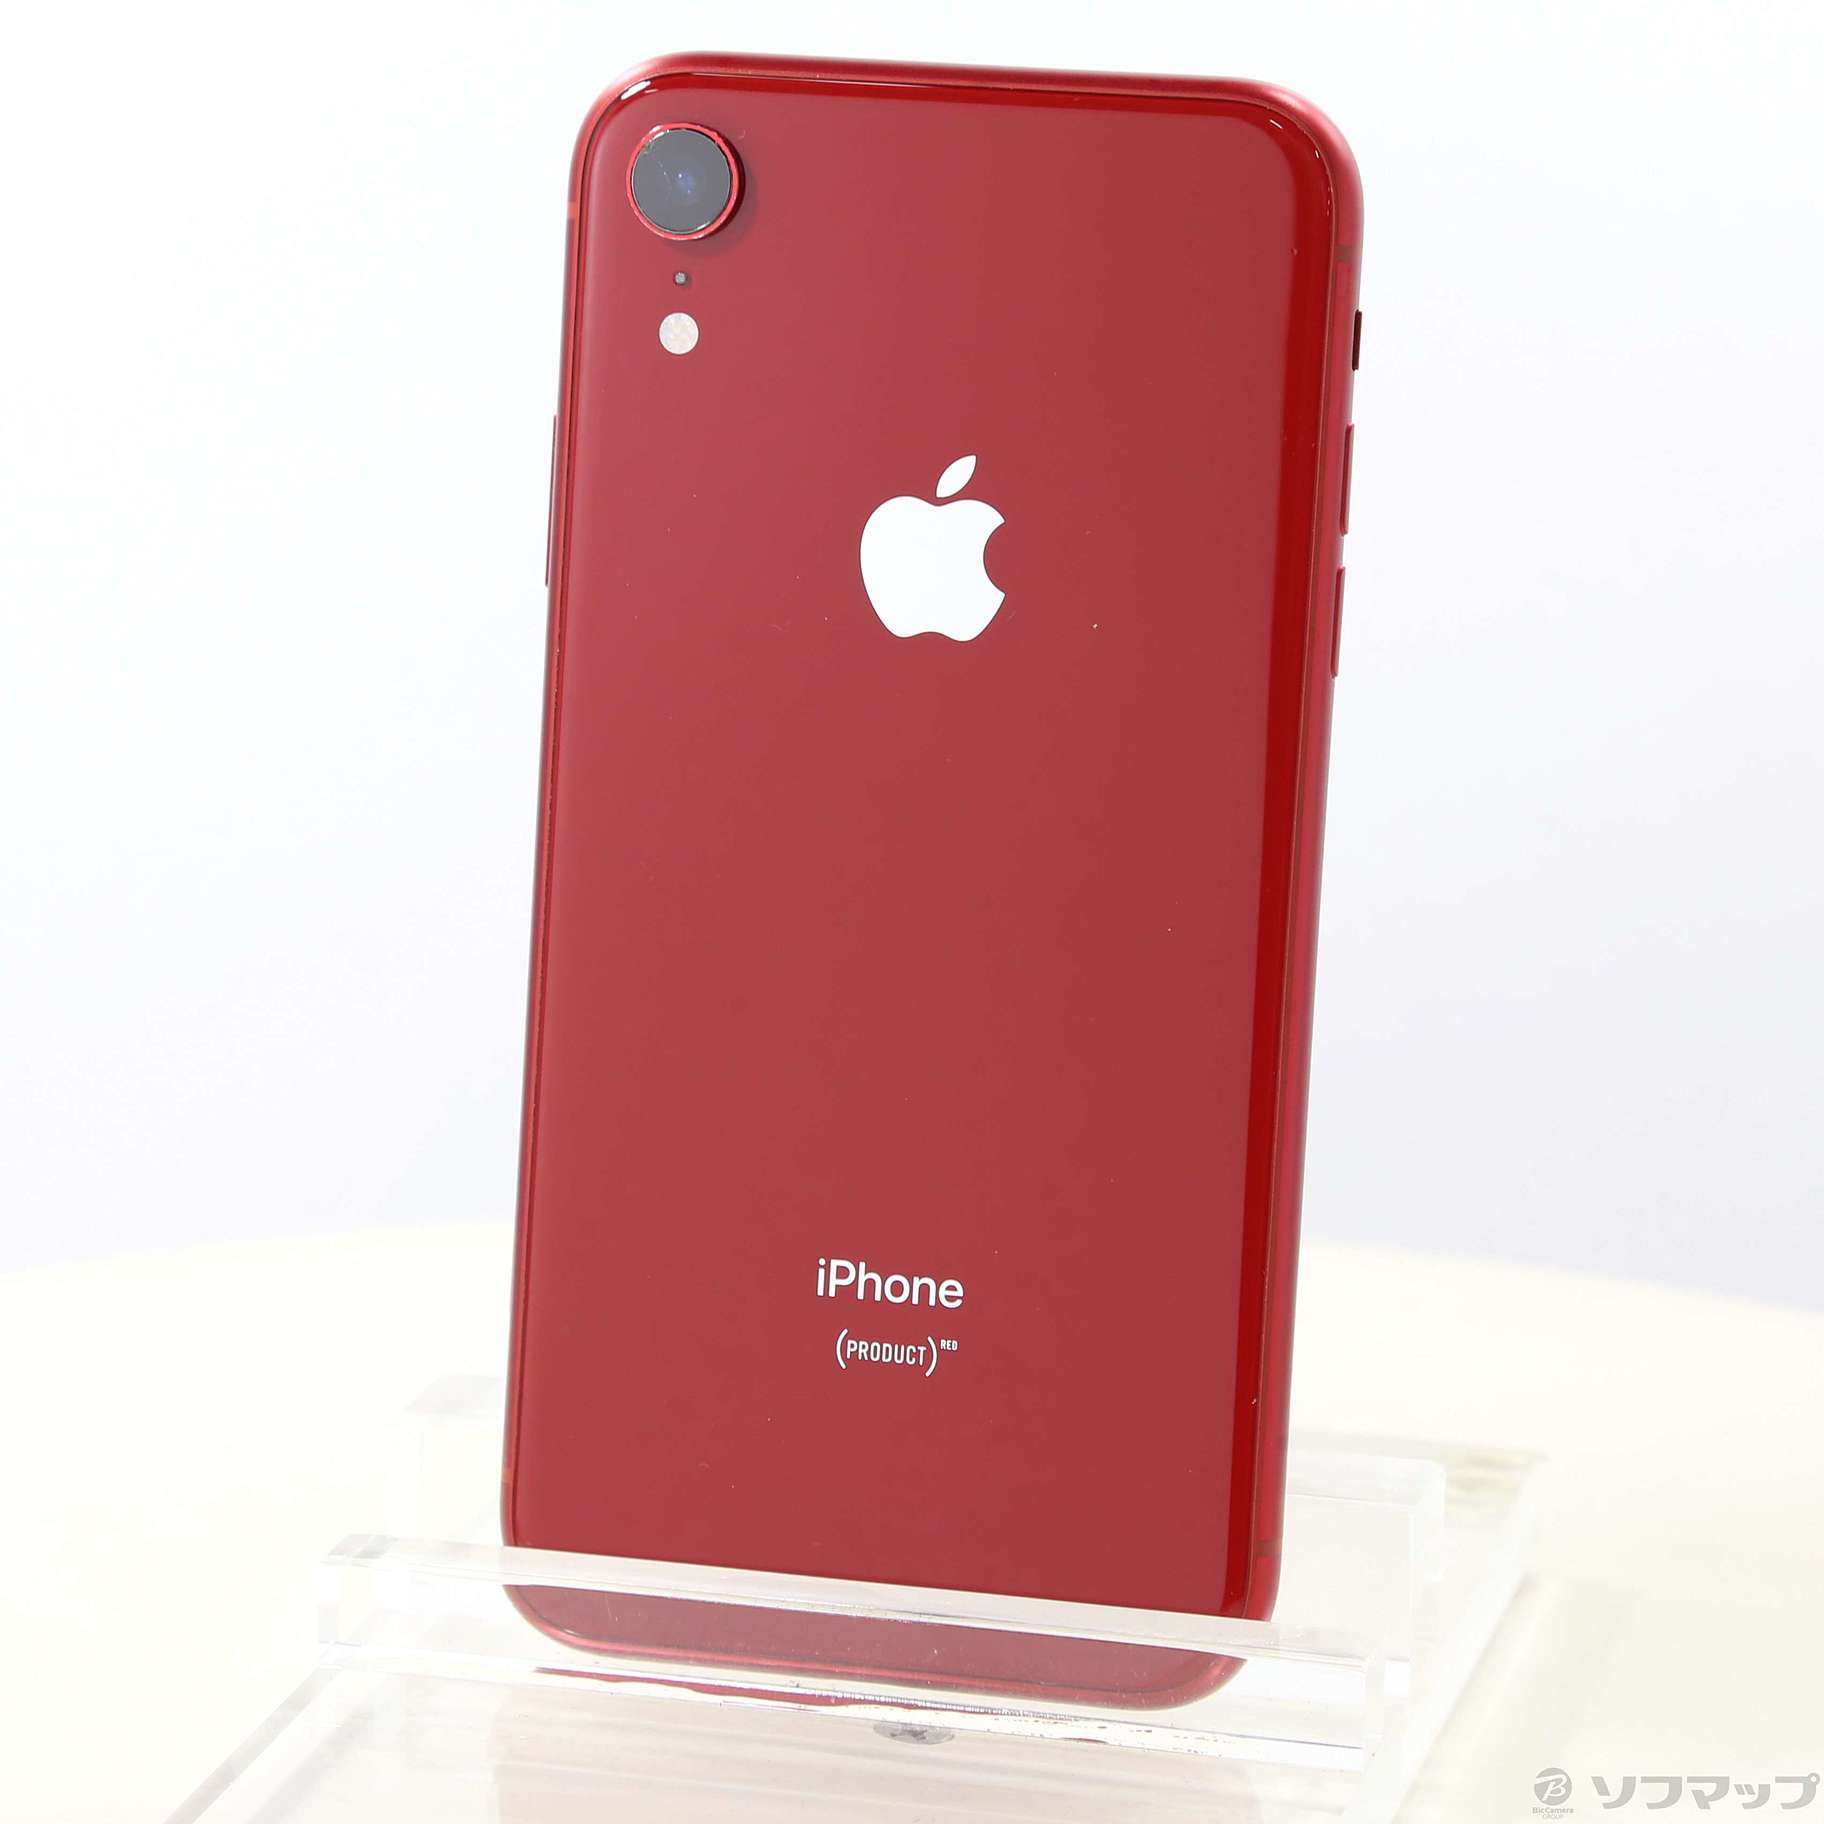 iPhoneiphone xr 128GB RED SIMFREE 版